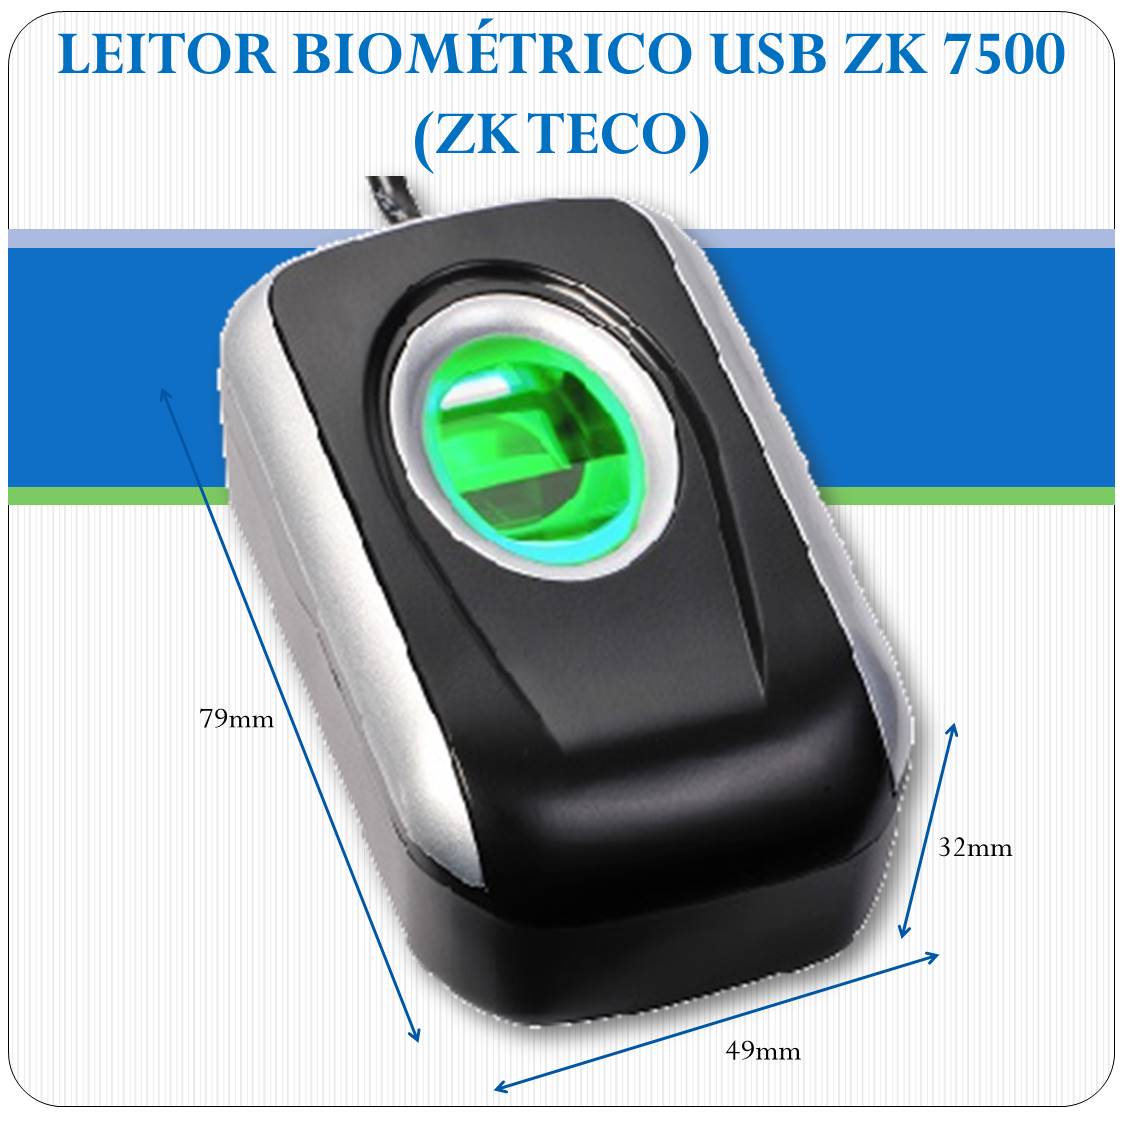 Leitor Biométrico USB - U7500 64bits 